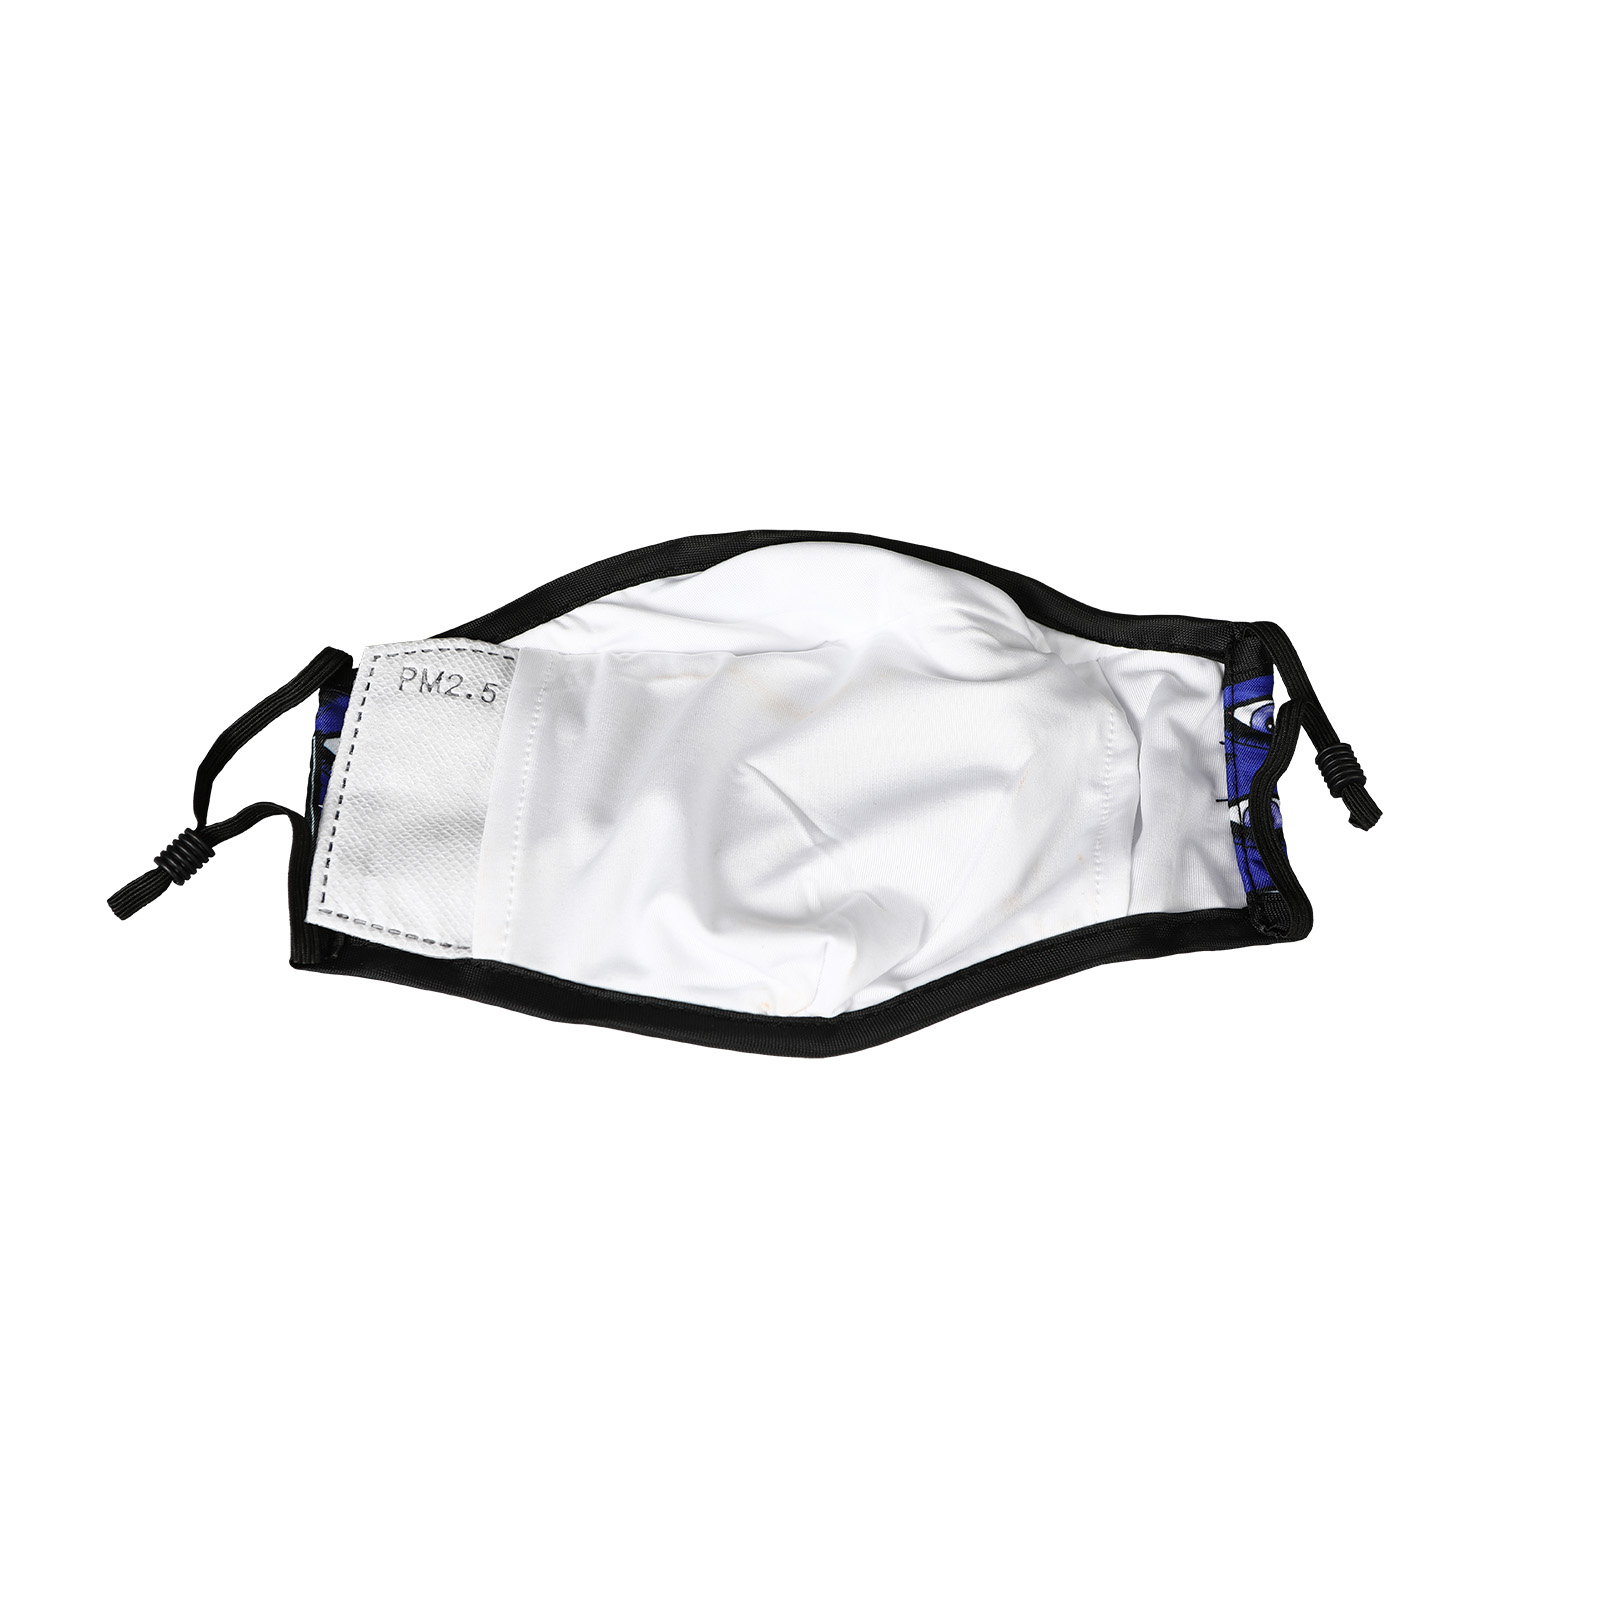 Shop.NEZ.ro – Masca Protectie Fashion NEZ Filtru PM2.5 – NEZ Medical Fitness (6)